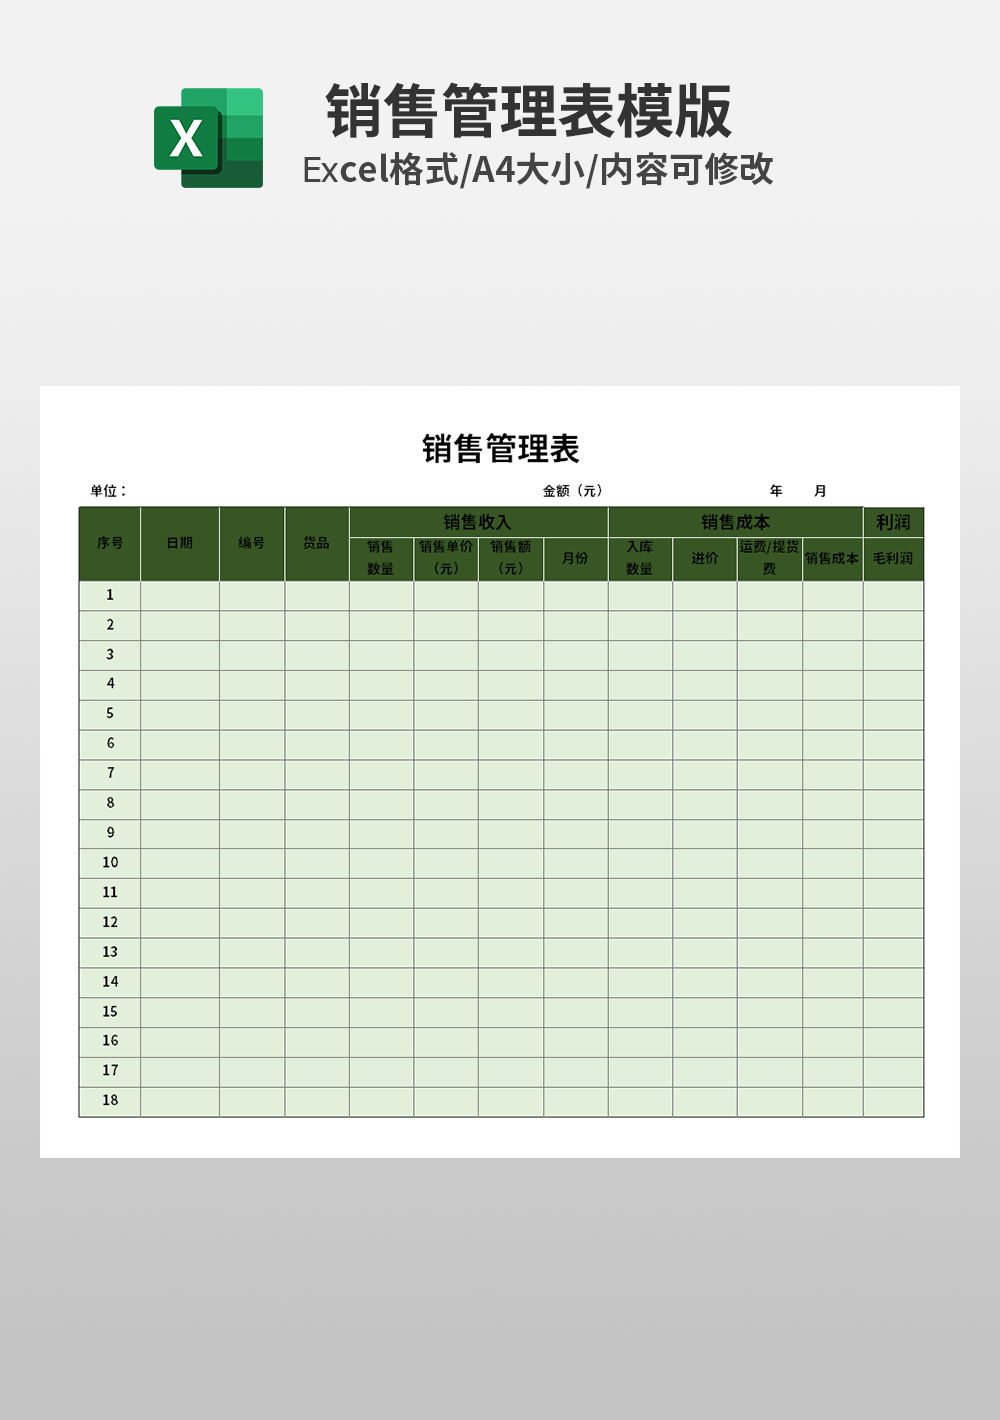 2021年市场销售管理表Excel模板